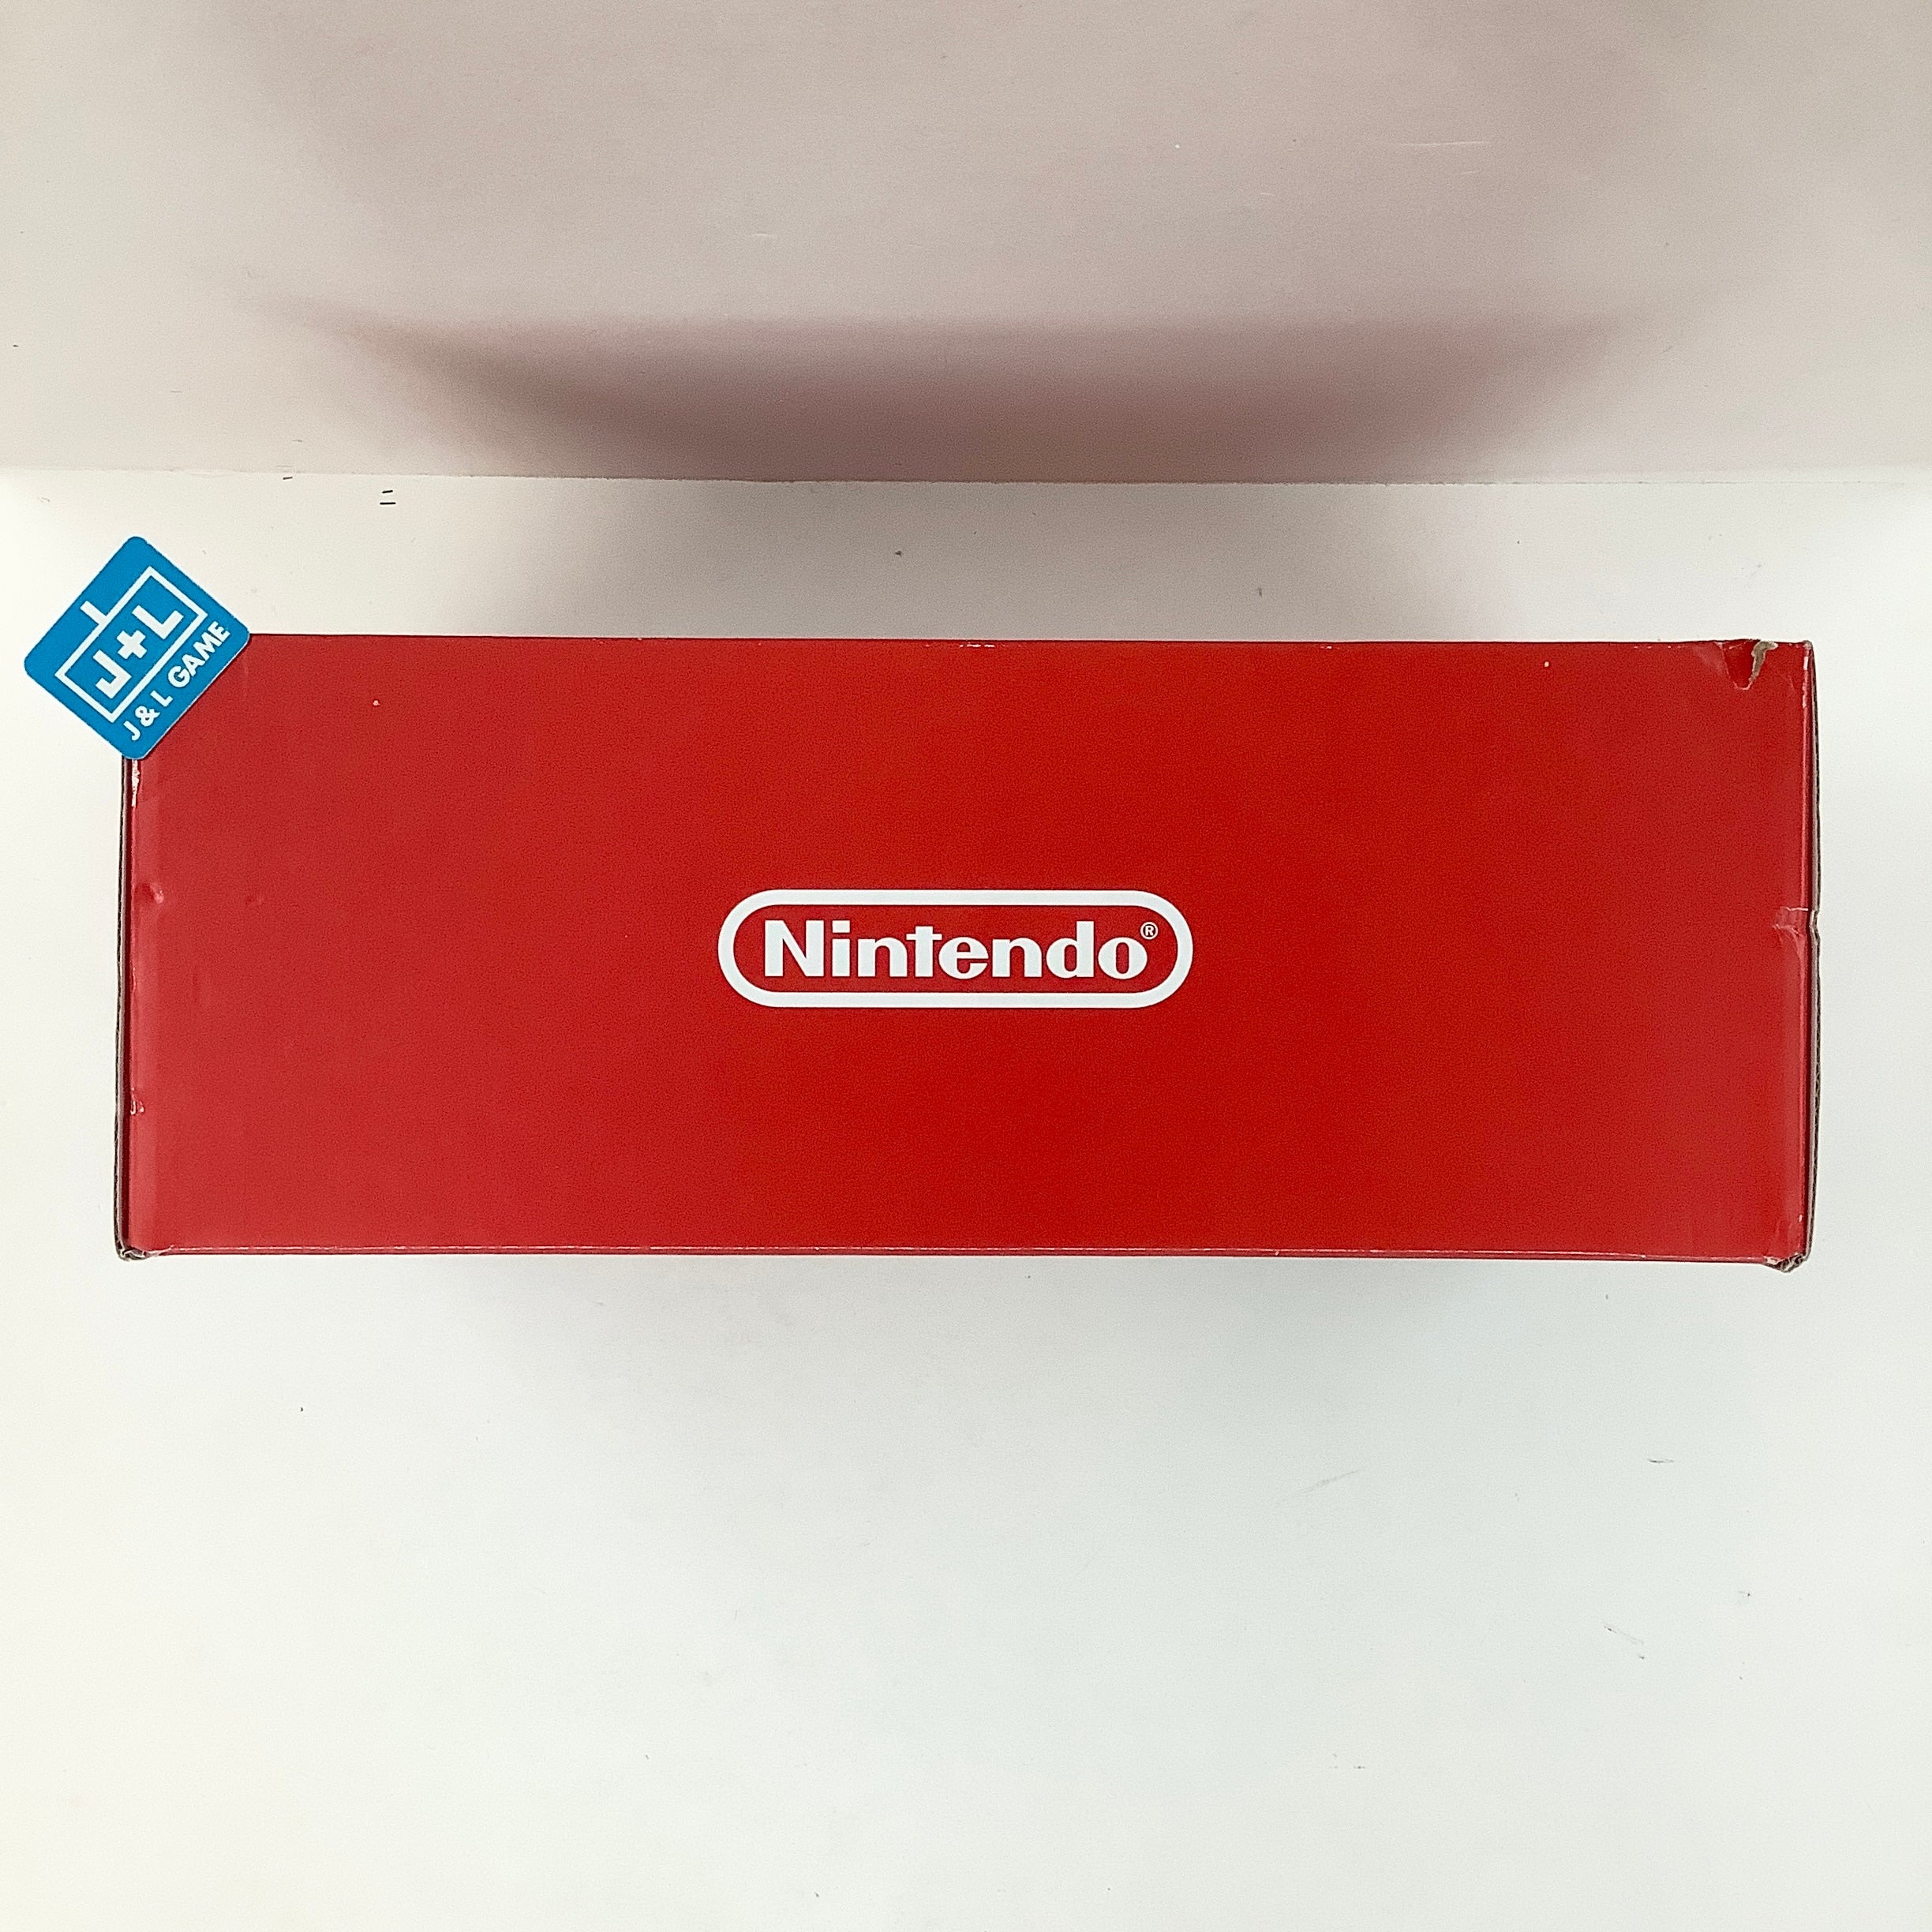 Nintendo Switch - Mario Red & Blue Edition - Nintendo Switch Consoles Nintendo   